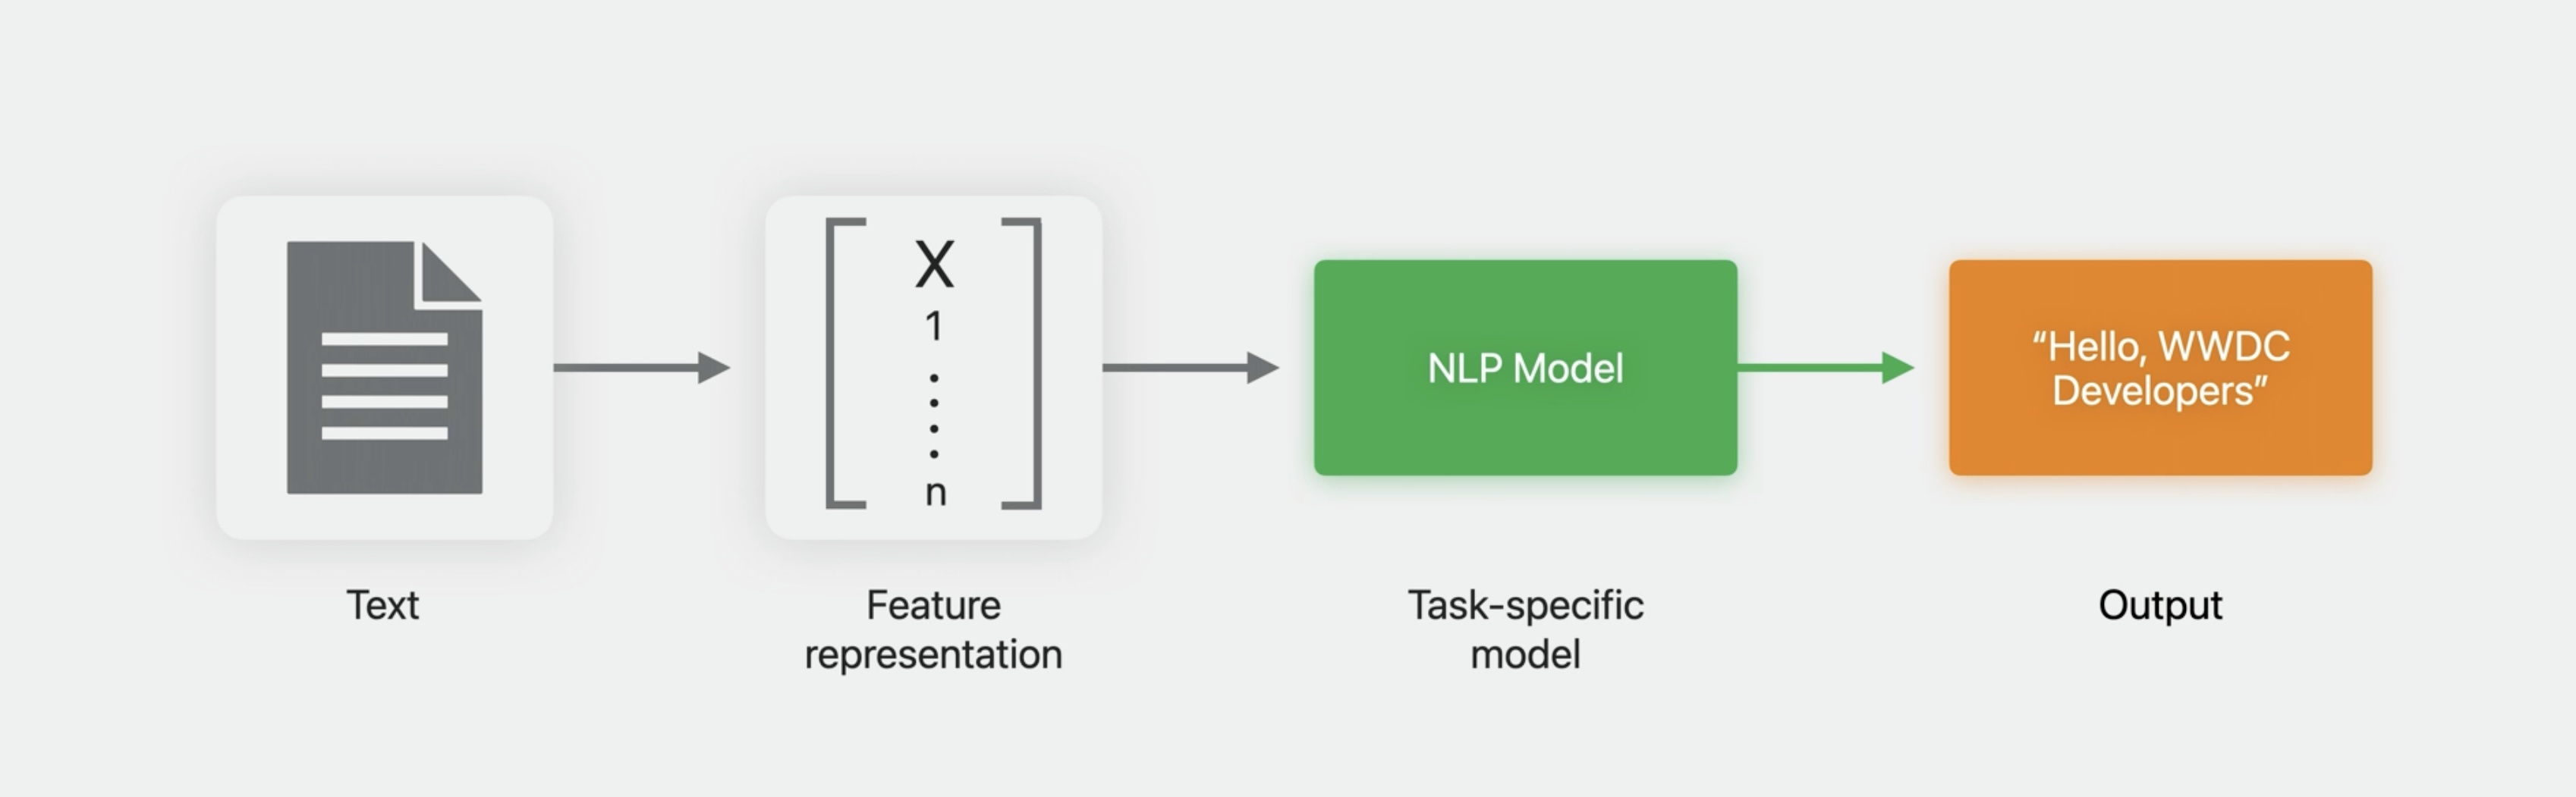 NLP Models